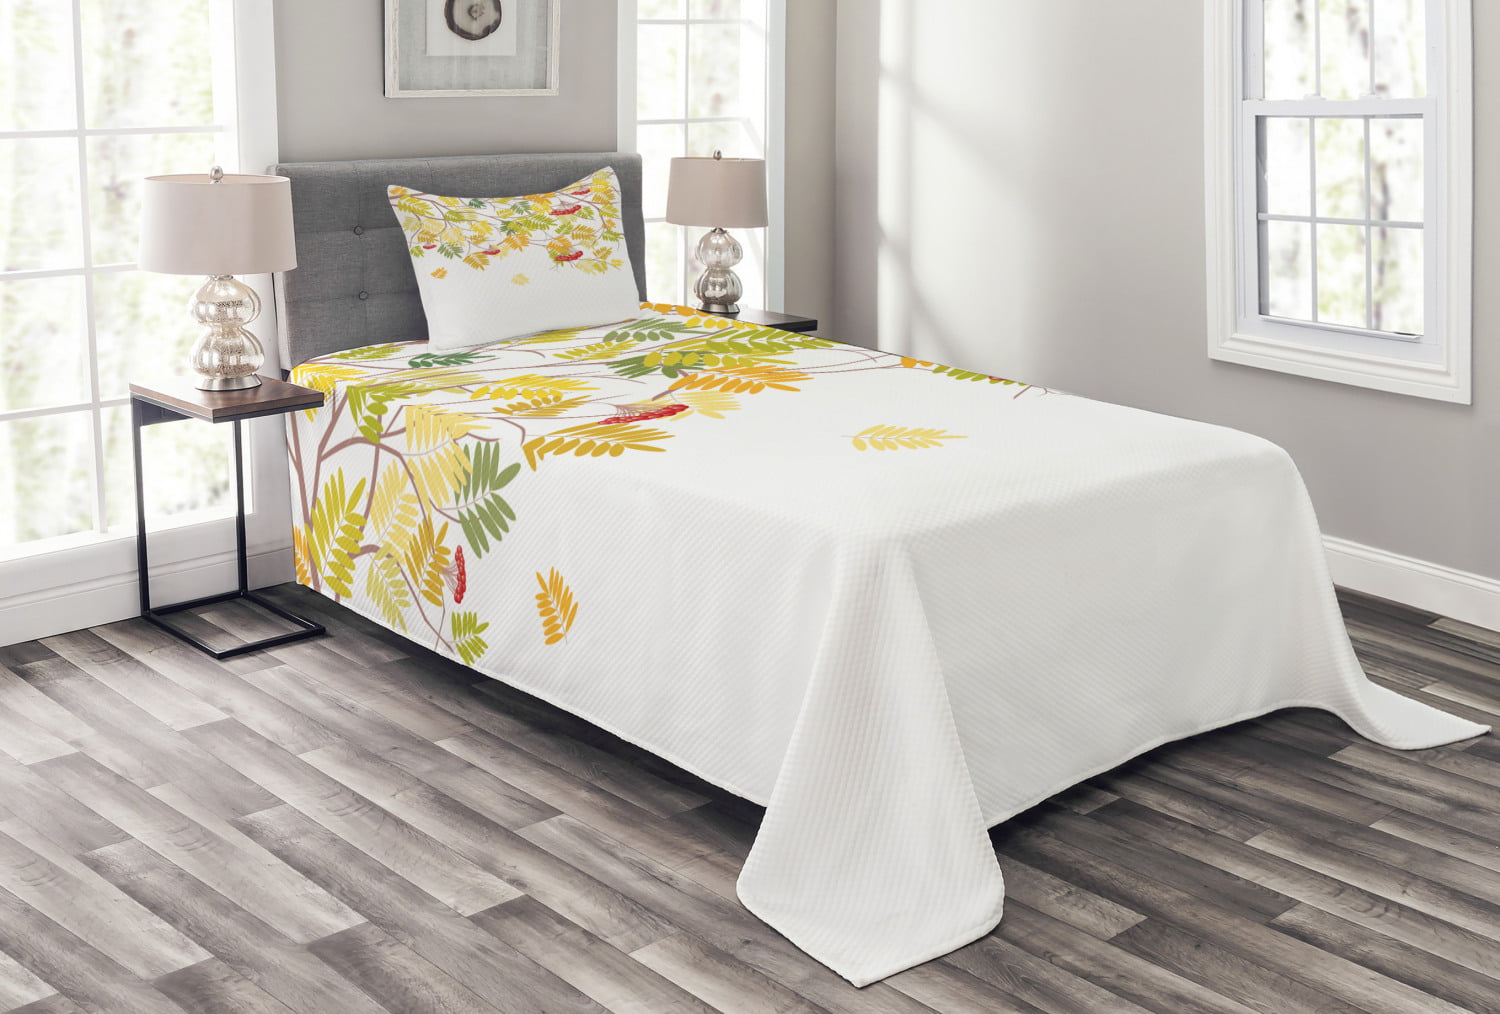 Details about   Rowan Quilted Bedspread & Pillow Shams Set Warm Colors Autumn Season Print